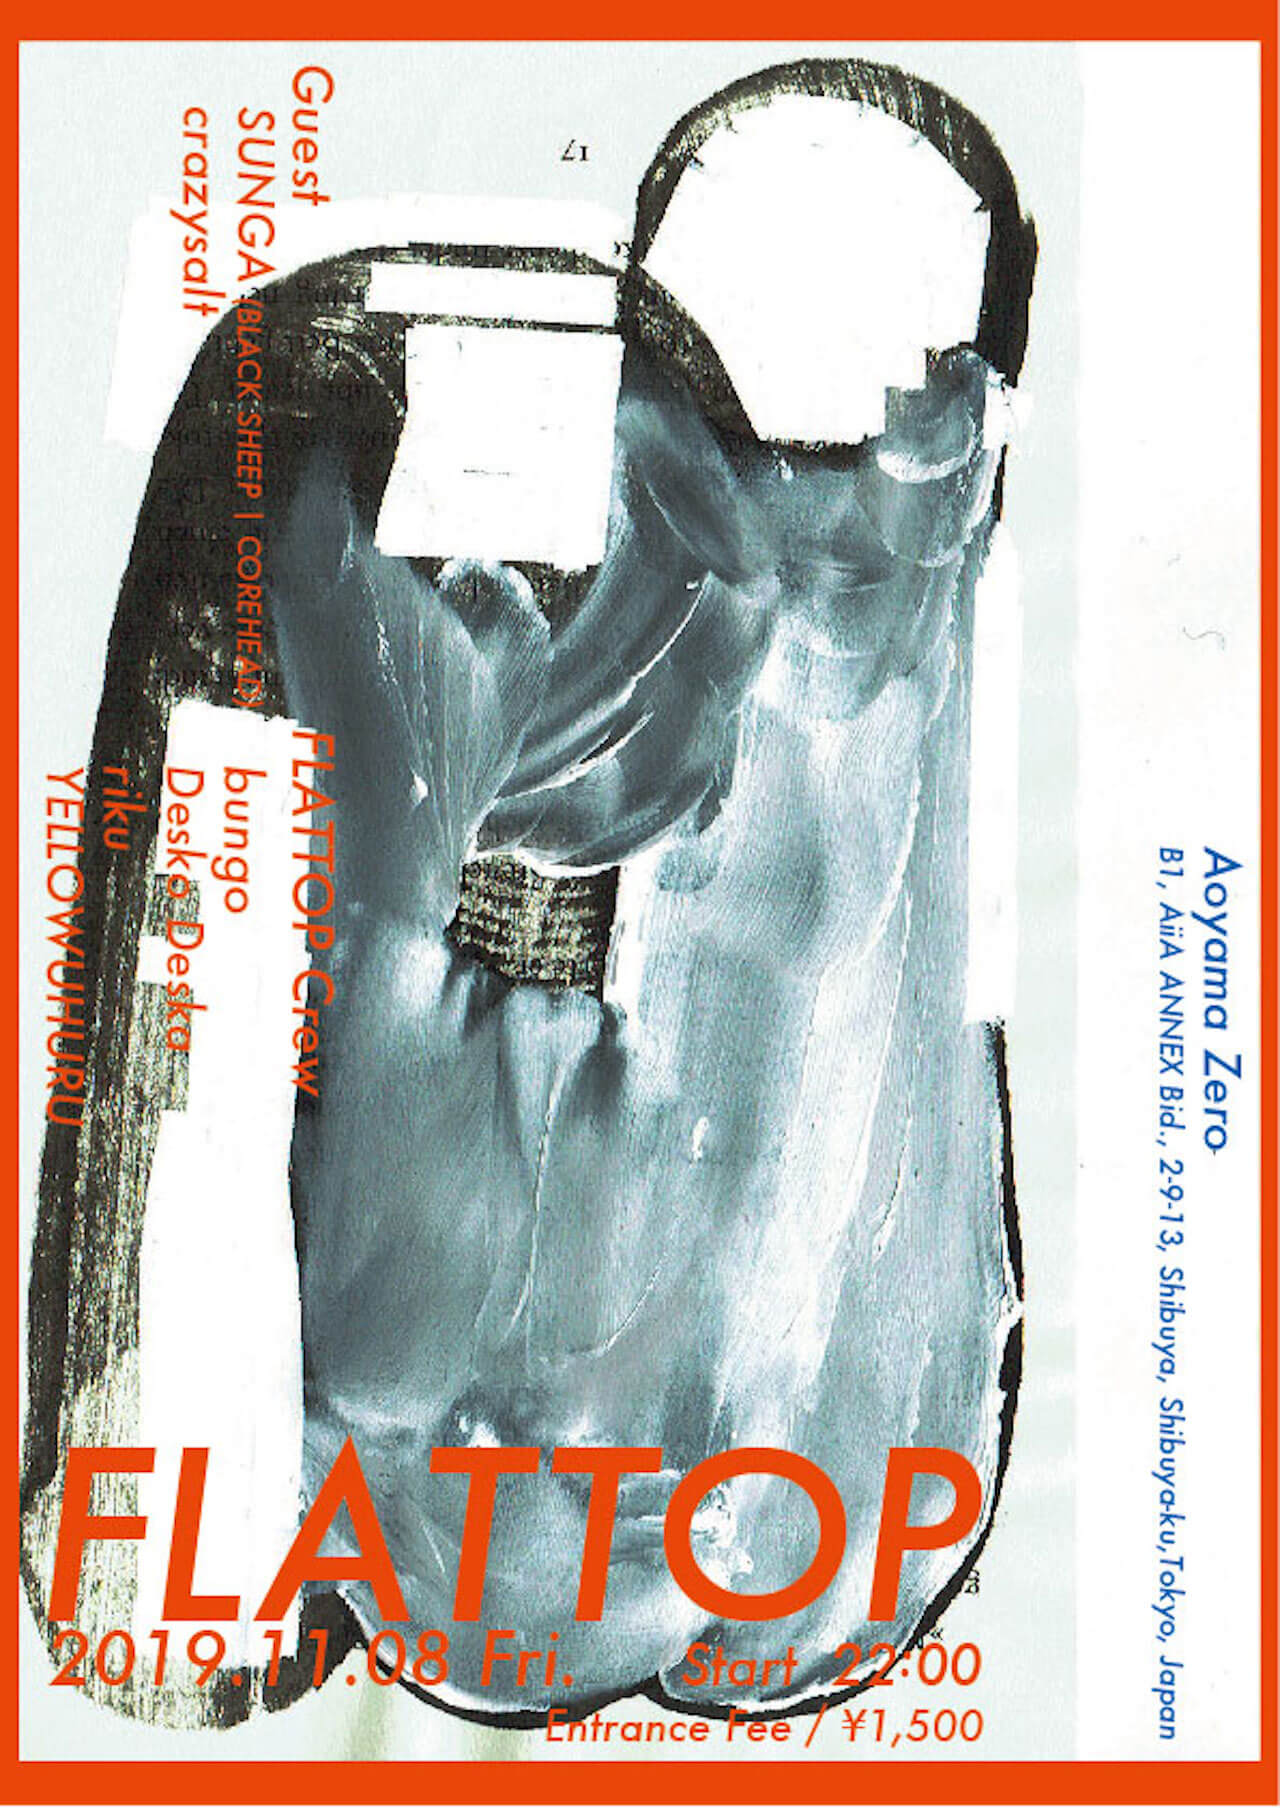 FLATTOPによる青山Zeroでの定期開催シリーズにSUNGA、crazysaltが登場 music191107-flattop-2